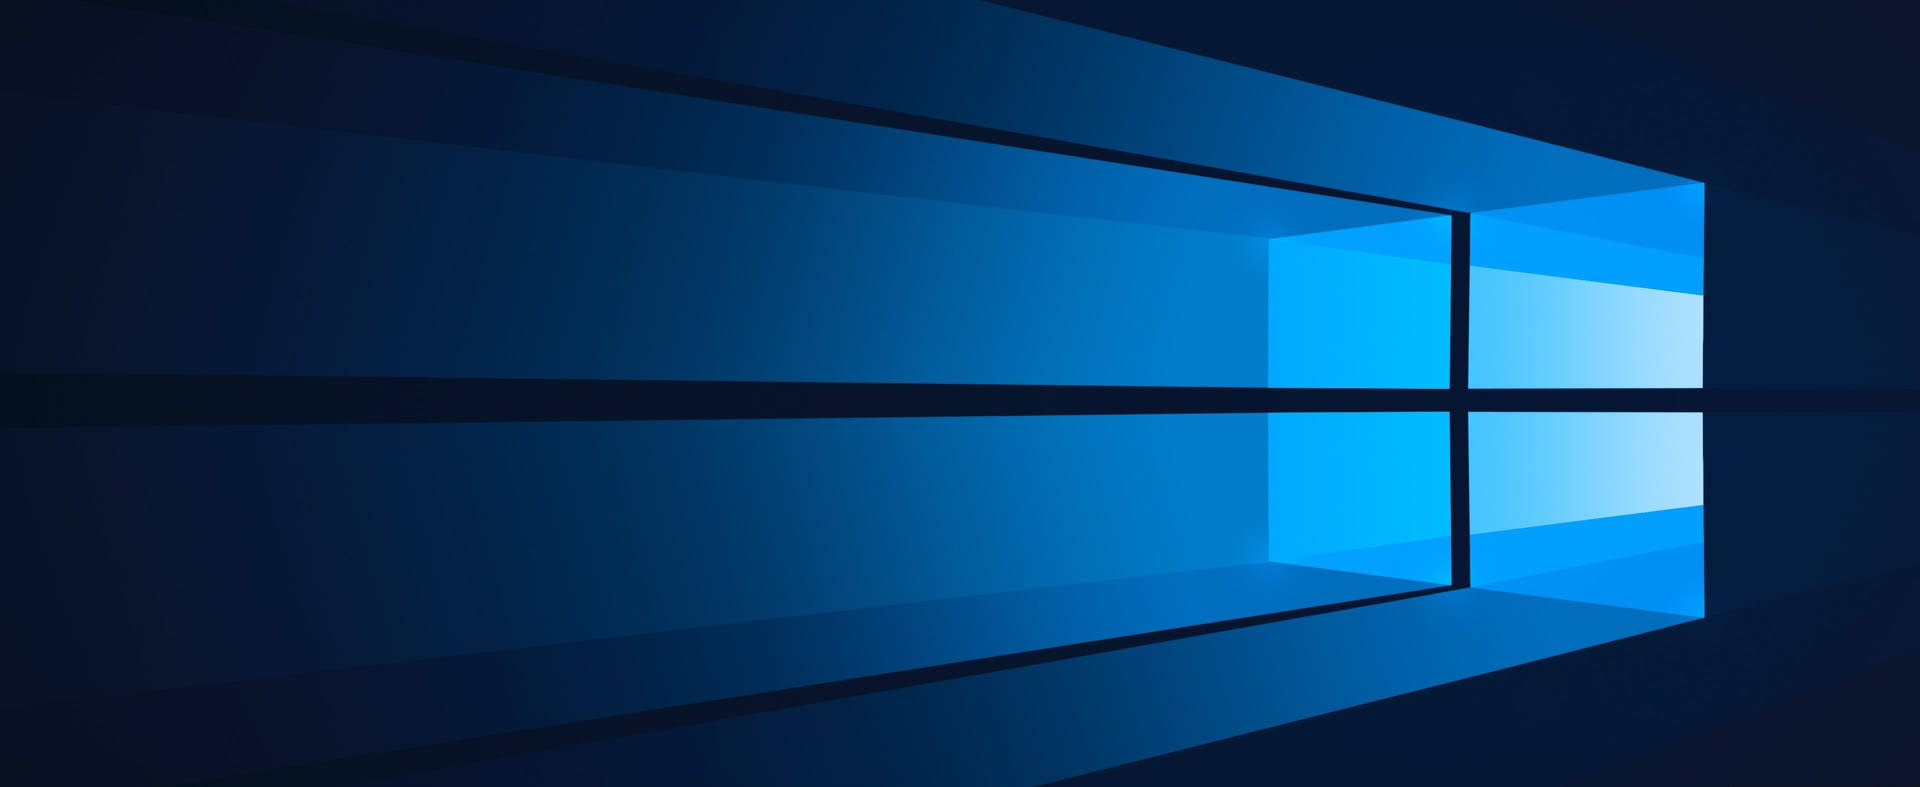 Logodi Windows 10 Con Luce Blu Sfondo